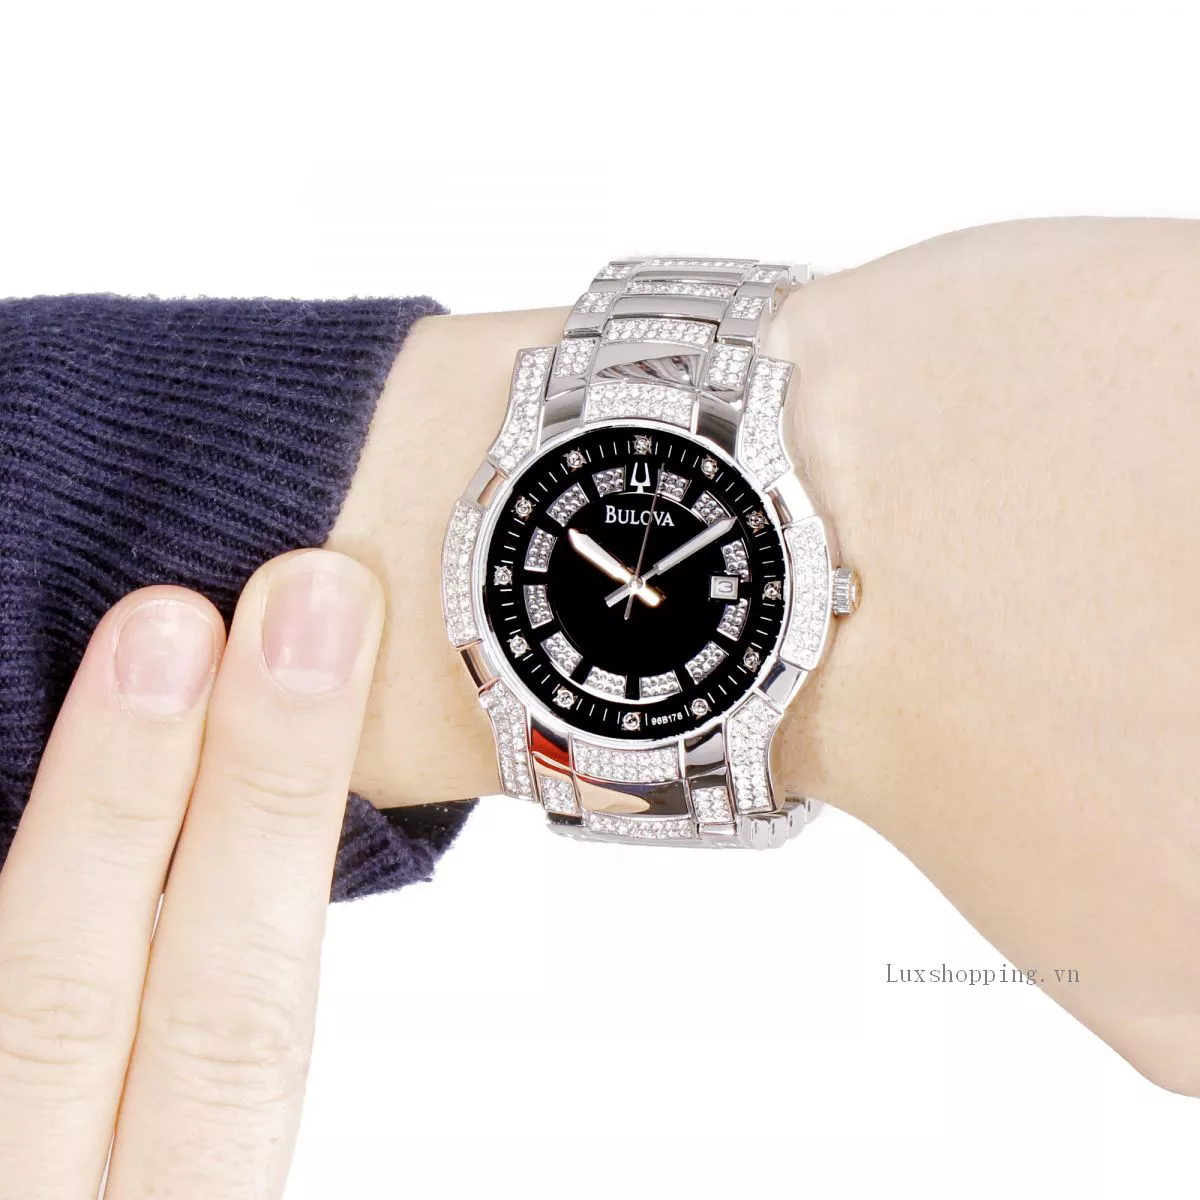 Bulova Crystal Men's Watch 42mm 